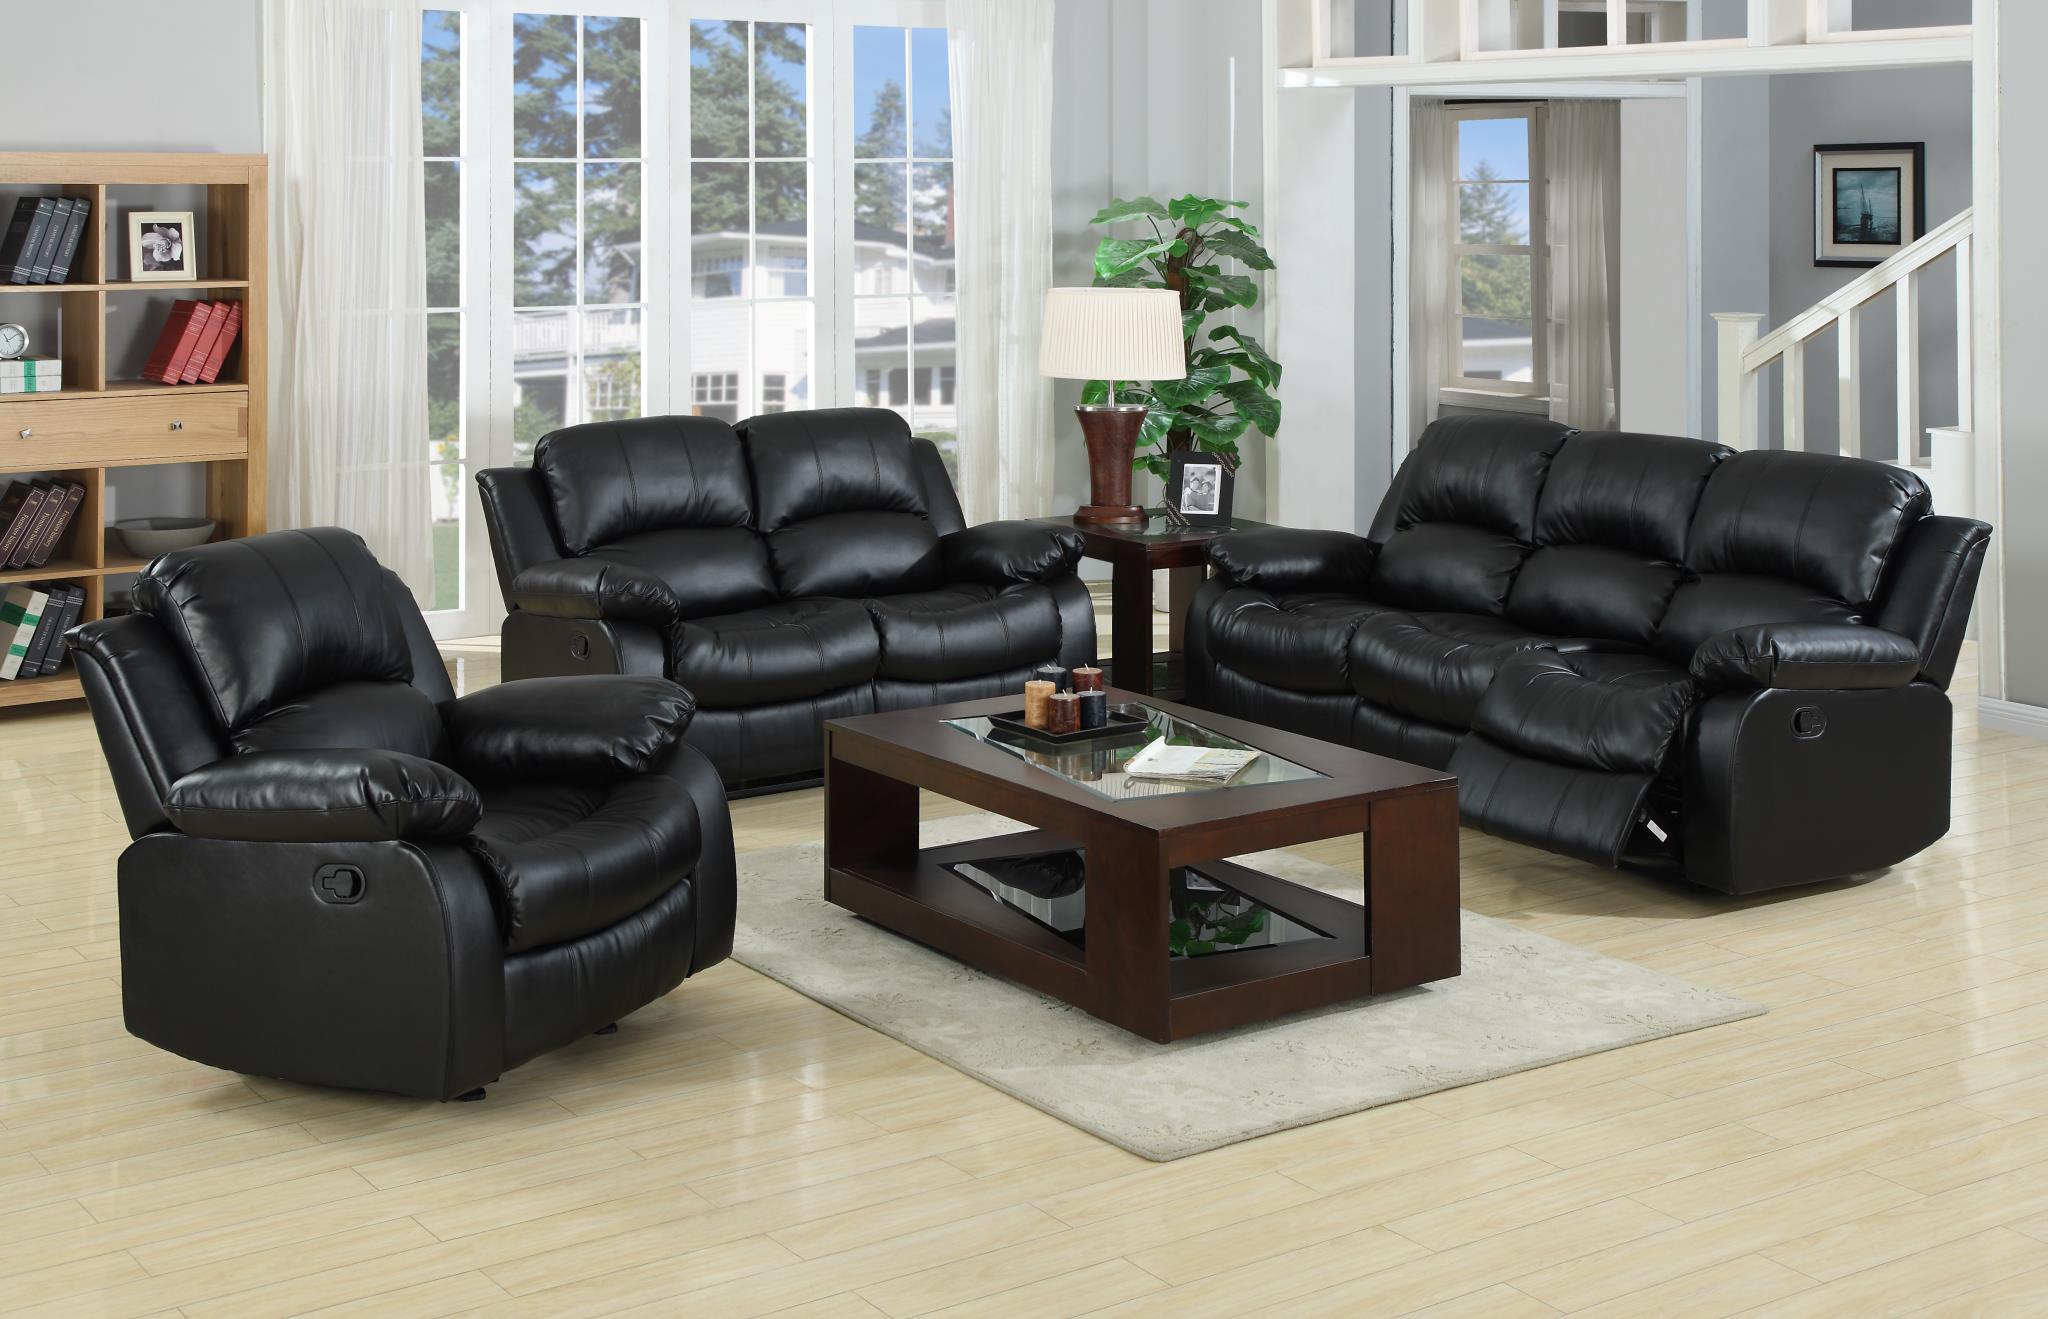 MYCO Furniture Kaden Sectional Living Room Set